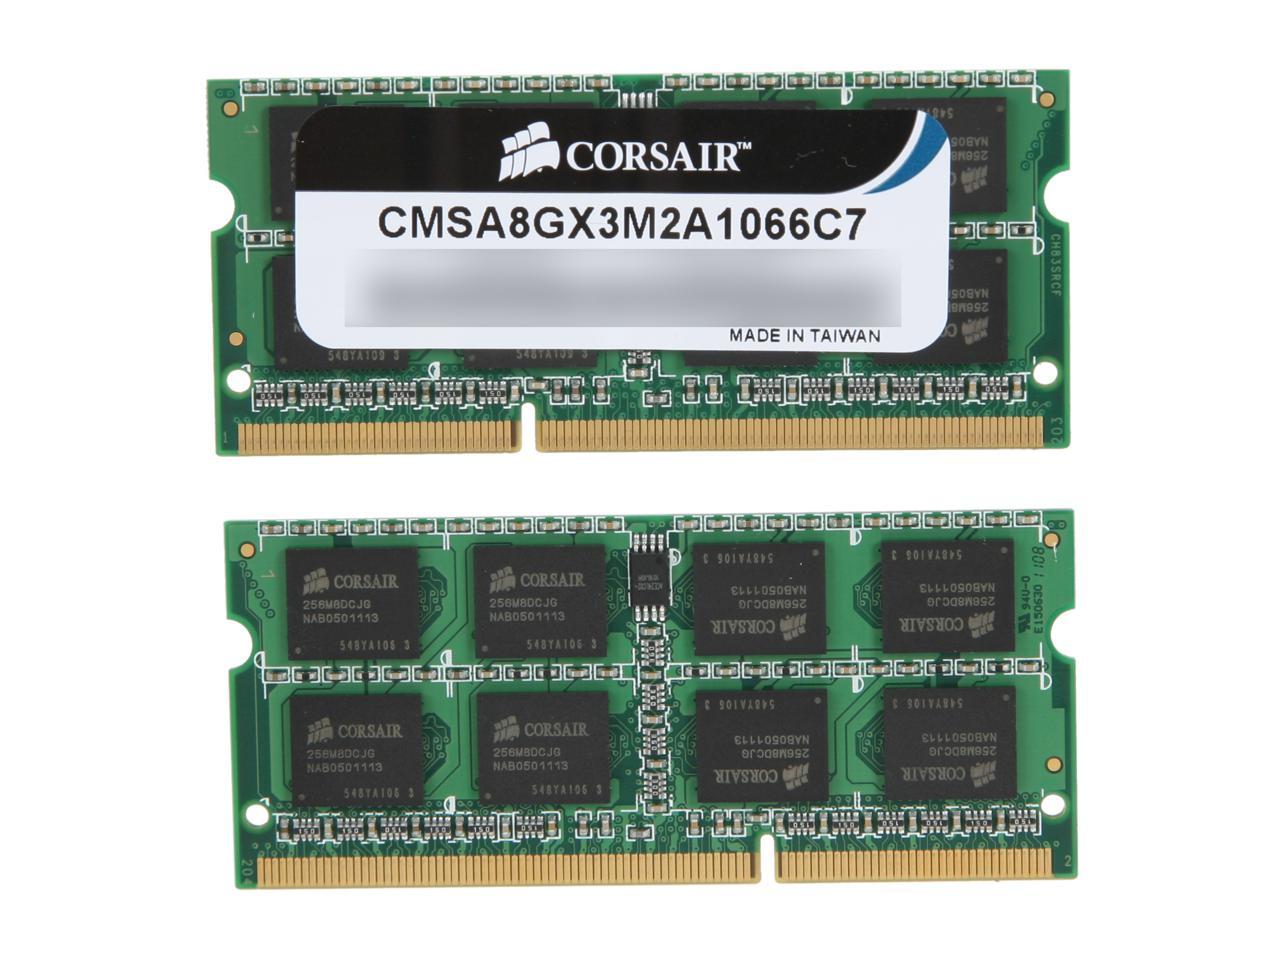 CORSAIR 8GB (2 x 4GB) 204-Pin DDR3 SO-DIMM DDR3 1066 (PC3 8500 